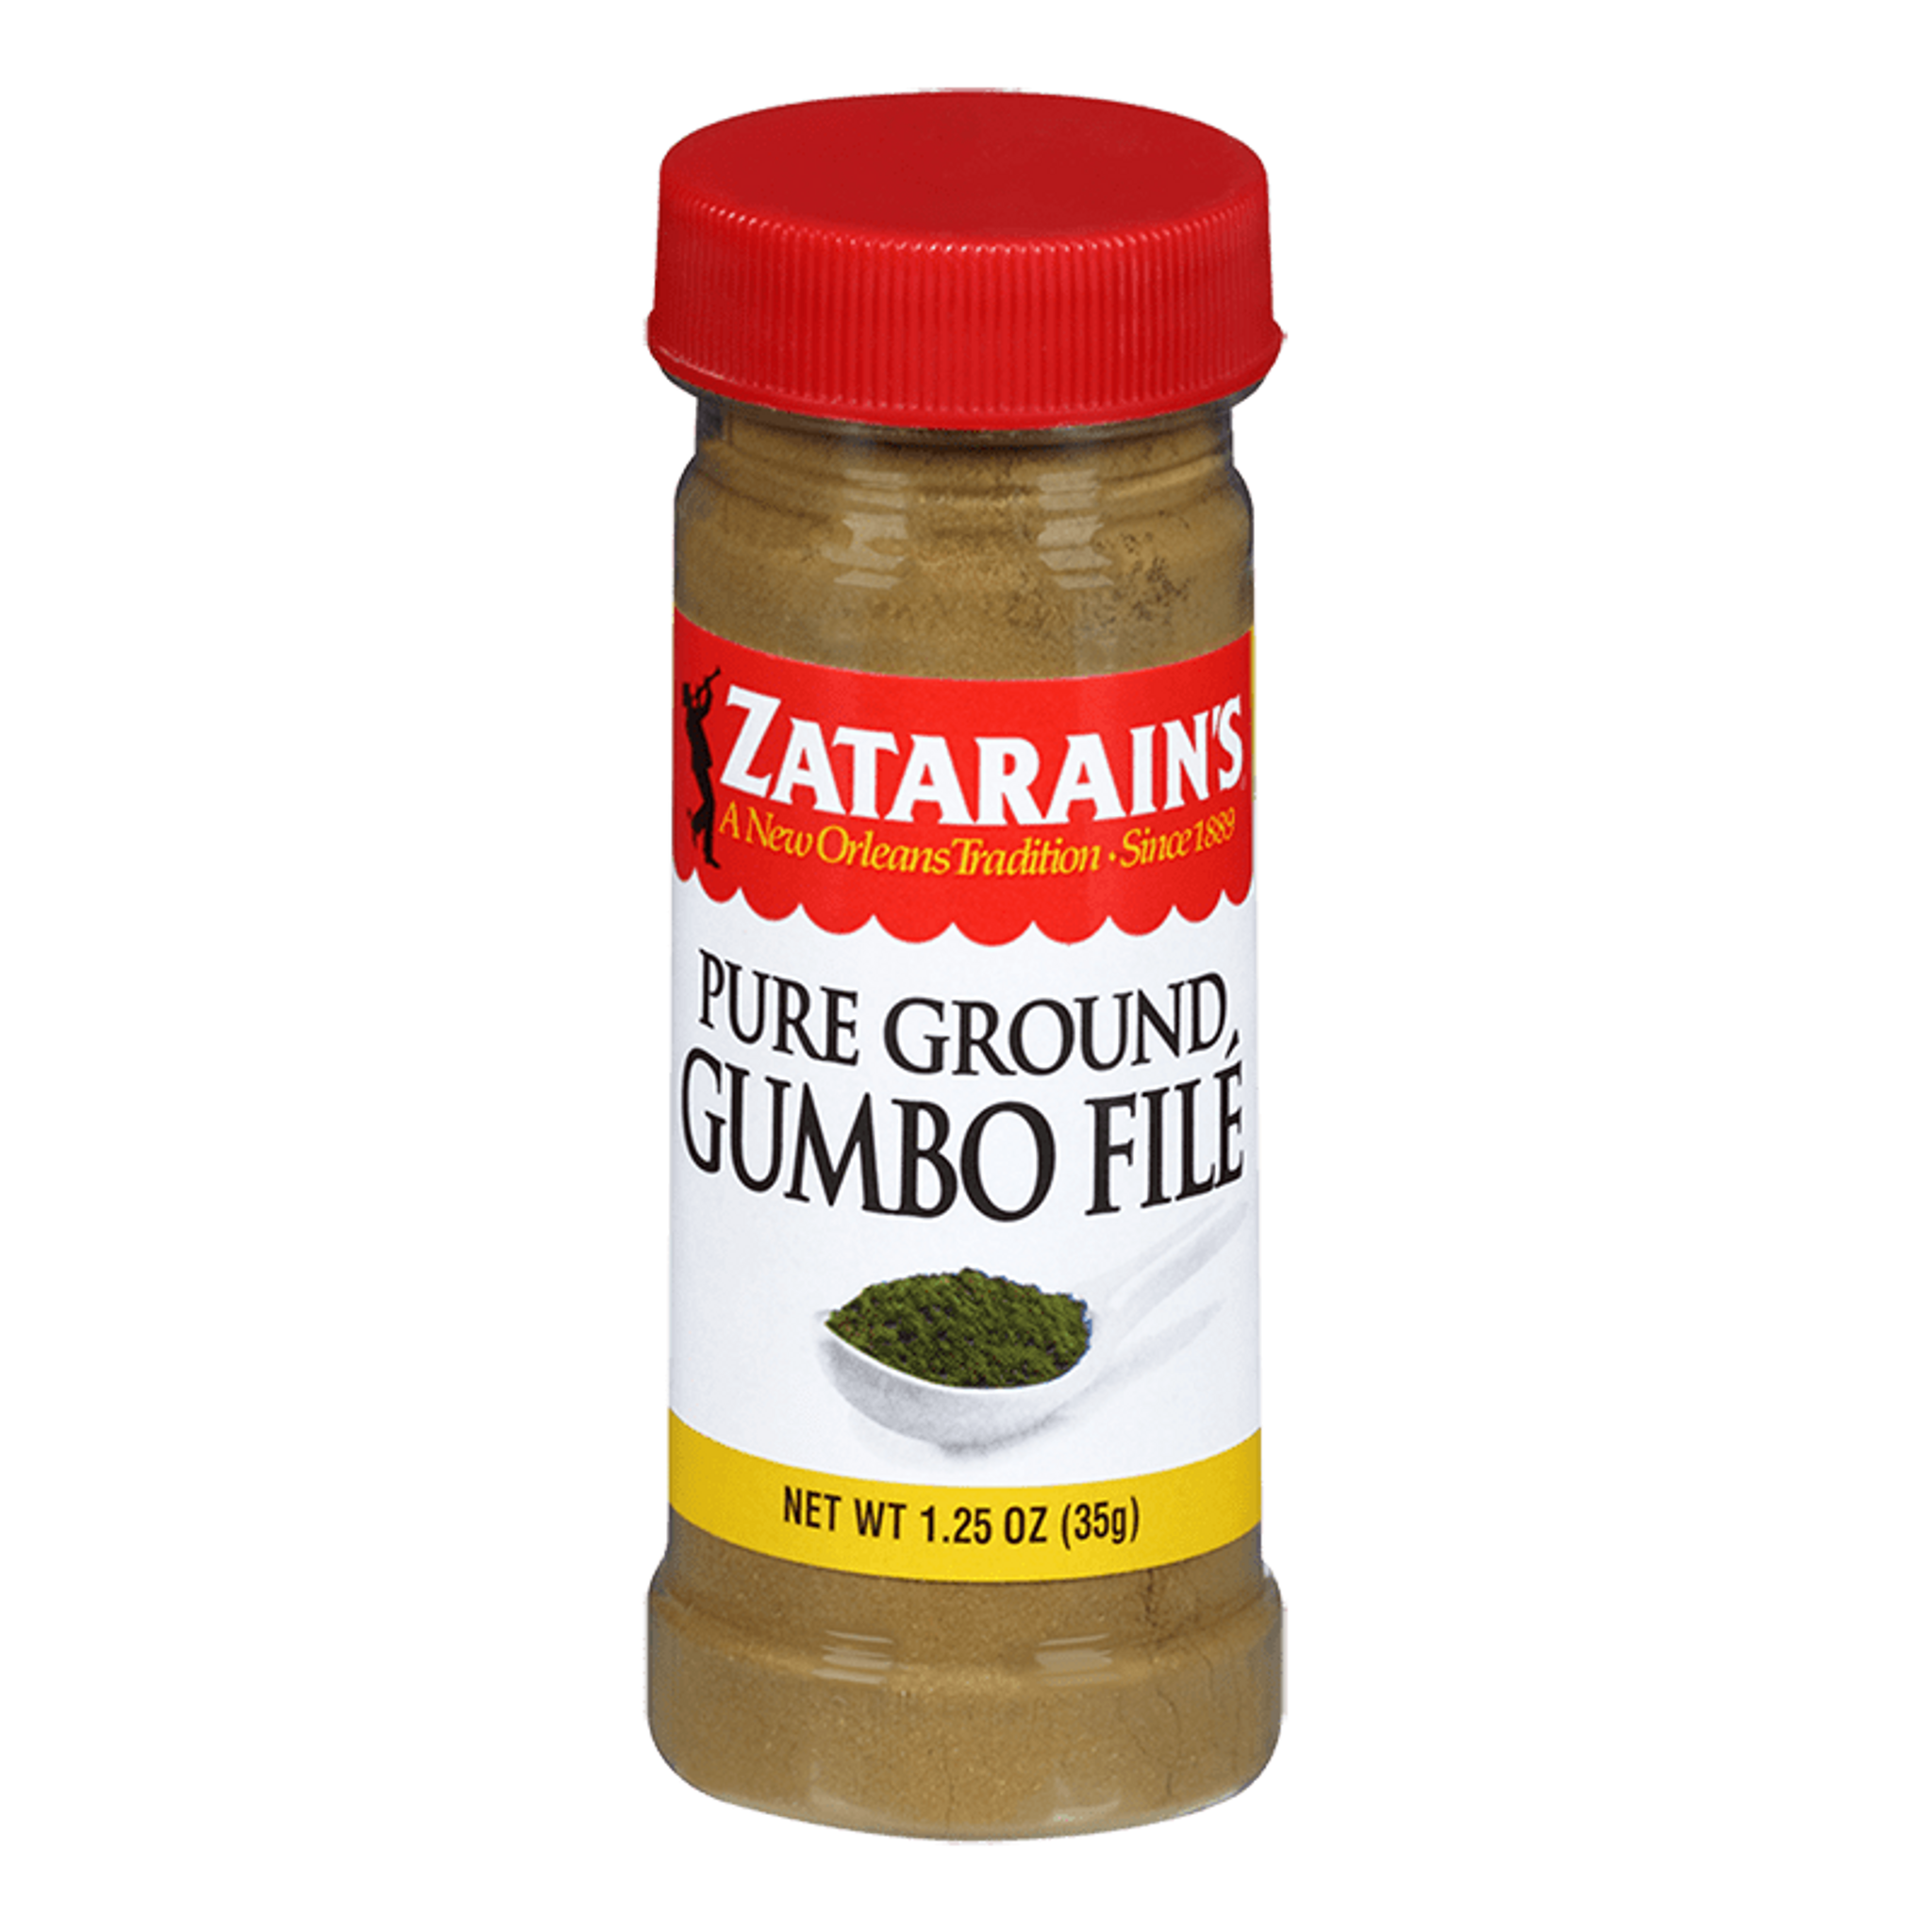 Zatarain's Gumbo File, 1.25 OZ